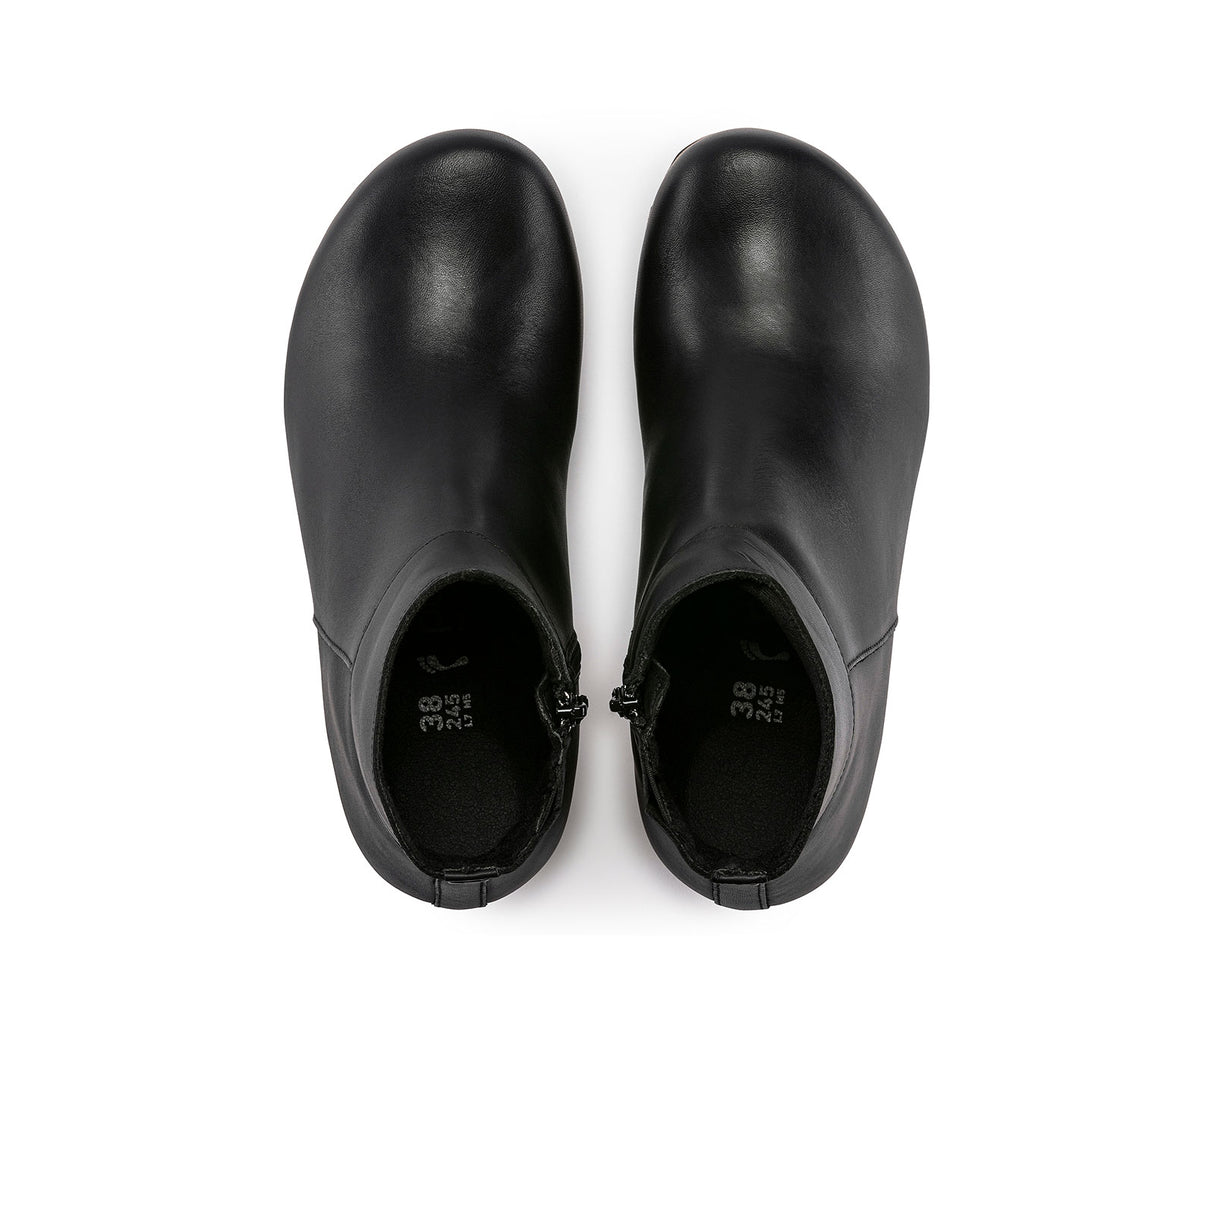 Birkenstock Ebba Boot (Women) - Black Leather Boots - Fashion - The Heel Shoe Fitters